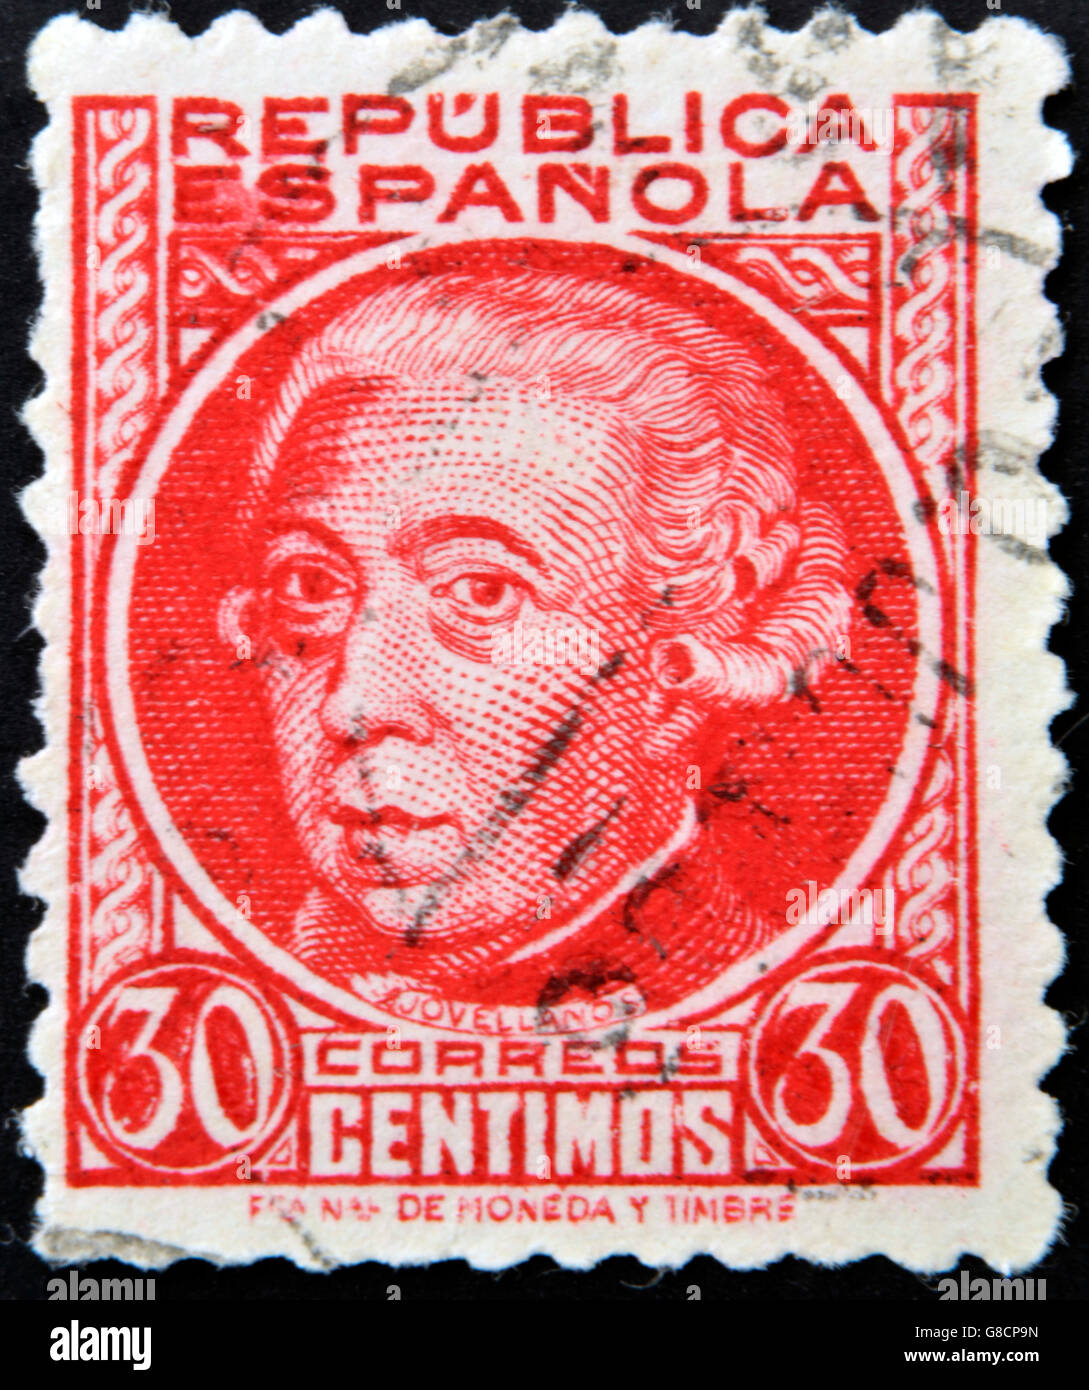 SPAIN - CIRCA 1933: A stamp printed in Spanish republic shows Jovellanos, circa 1933 Stock Photo